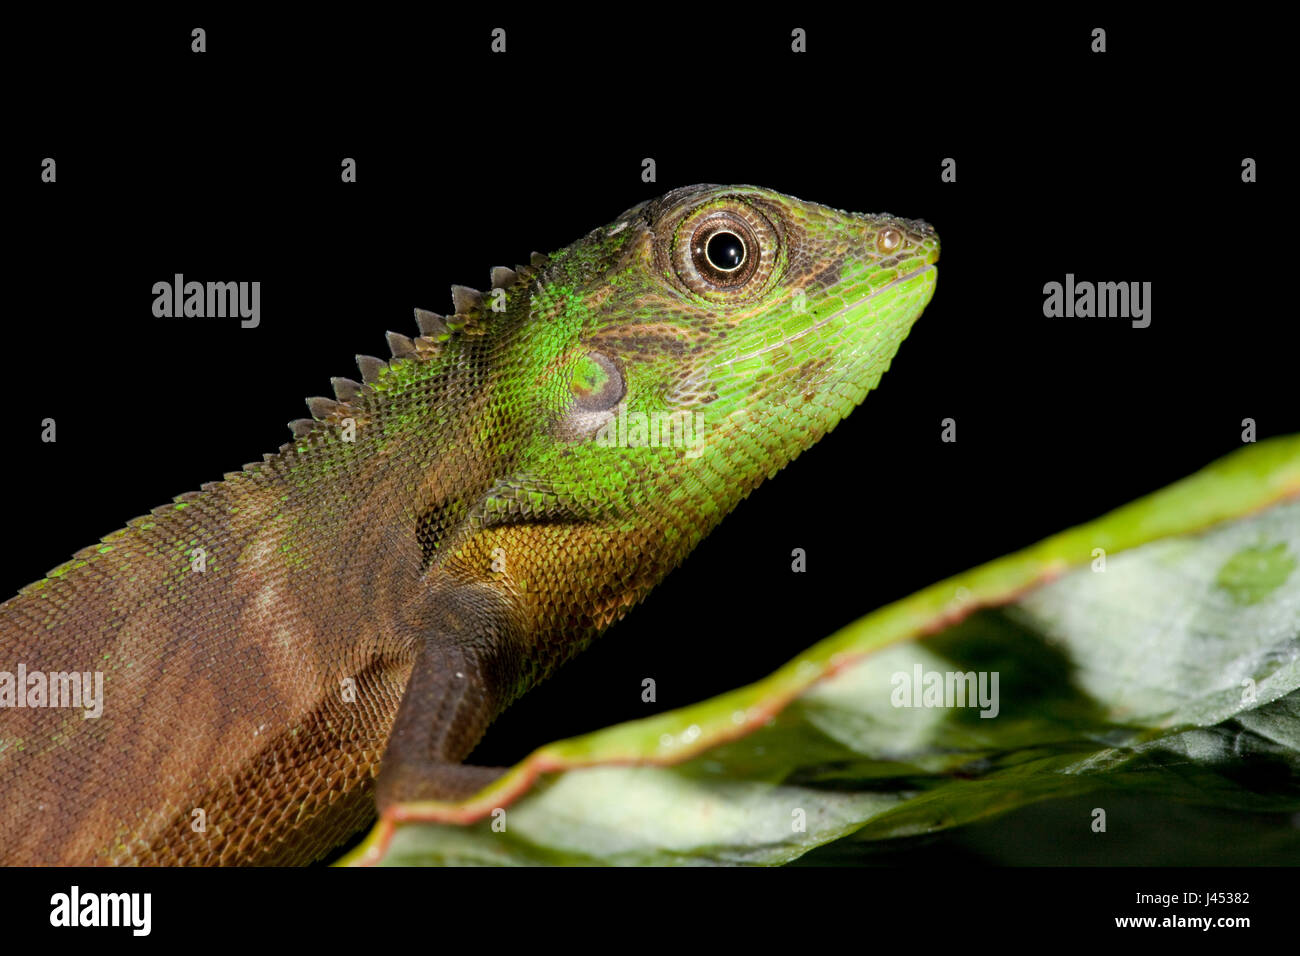 photo of a shrub lizard Stock Photo